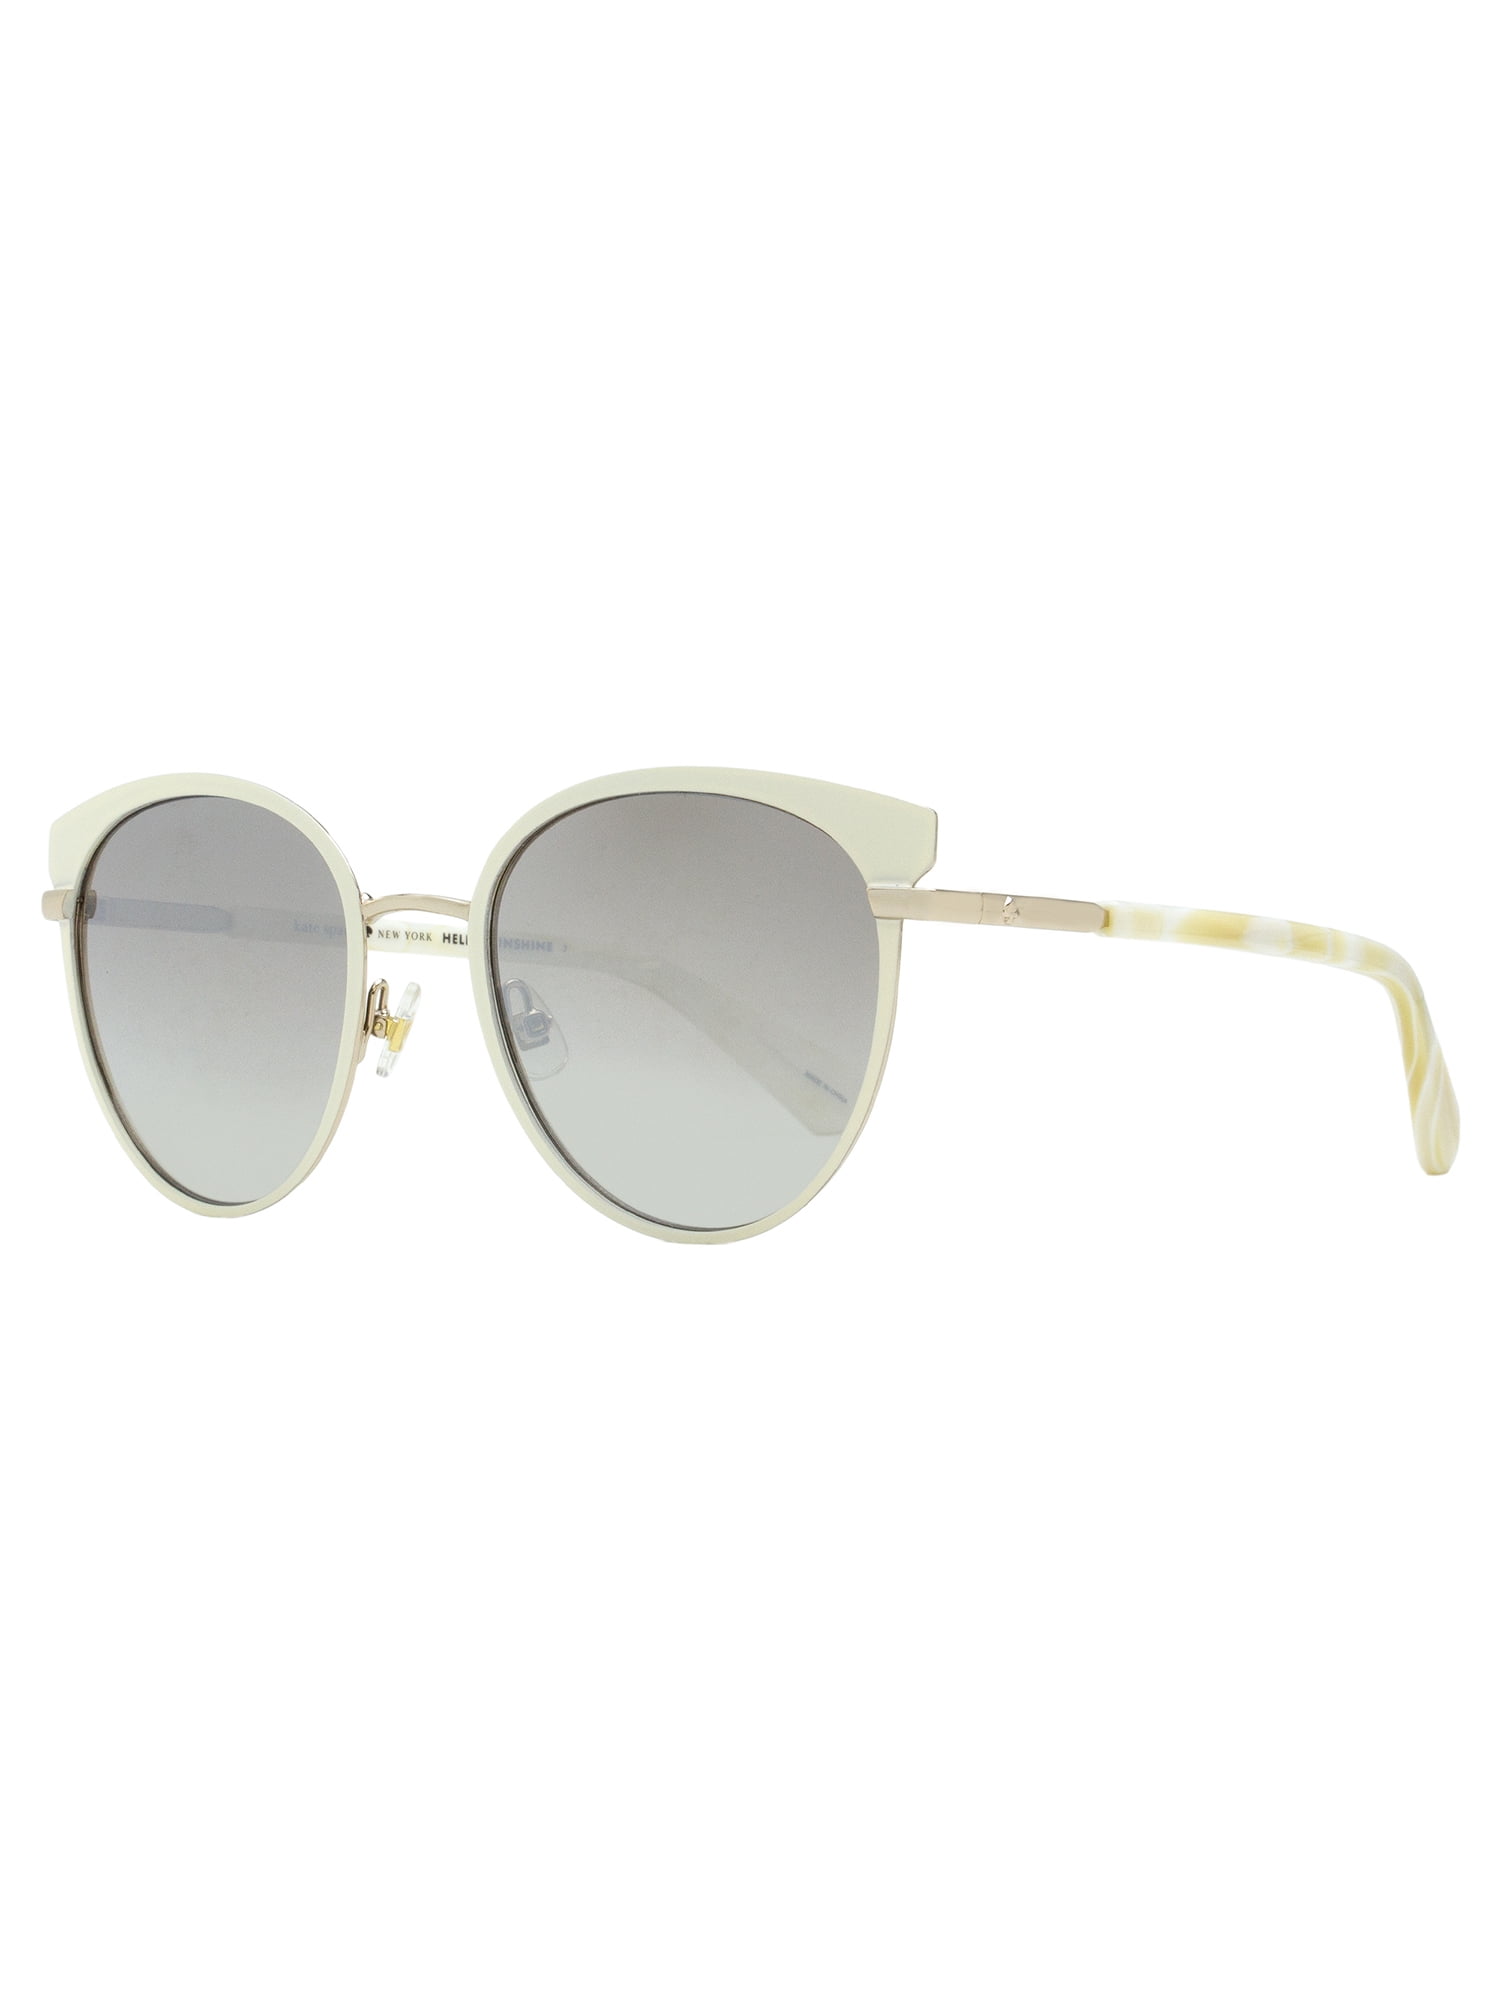 Kate Spade Oval Sunglasses Janalee/S FWMNQ Cream/Light Gold 53mm -  